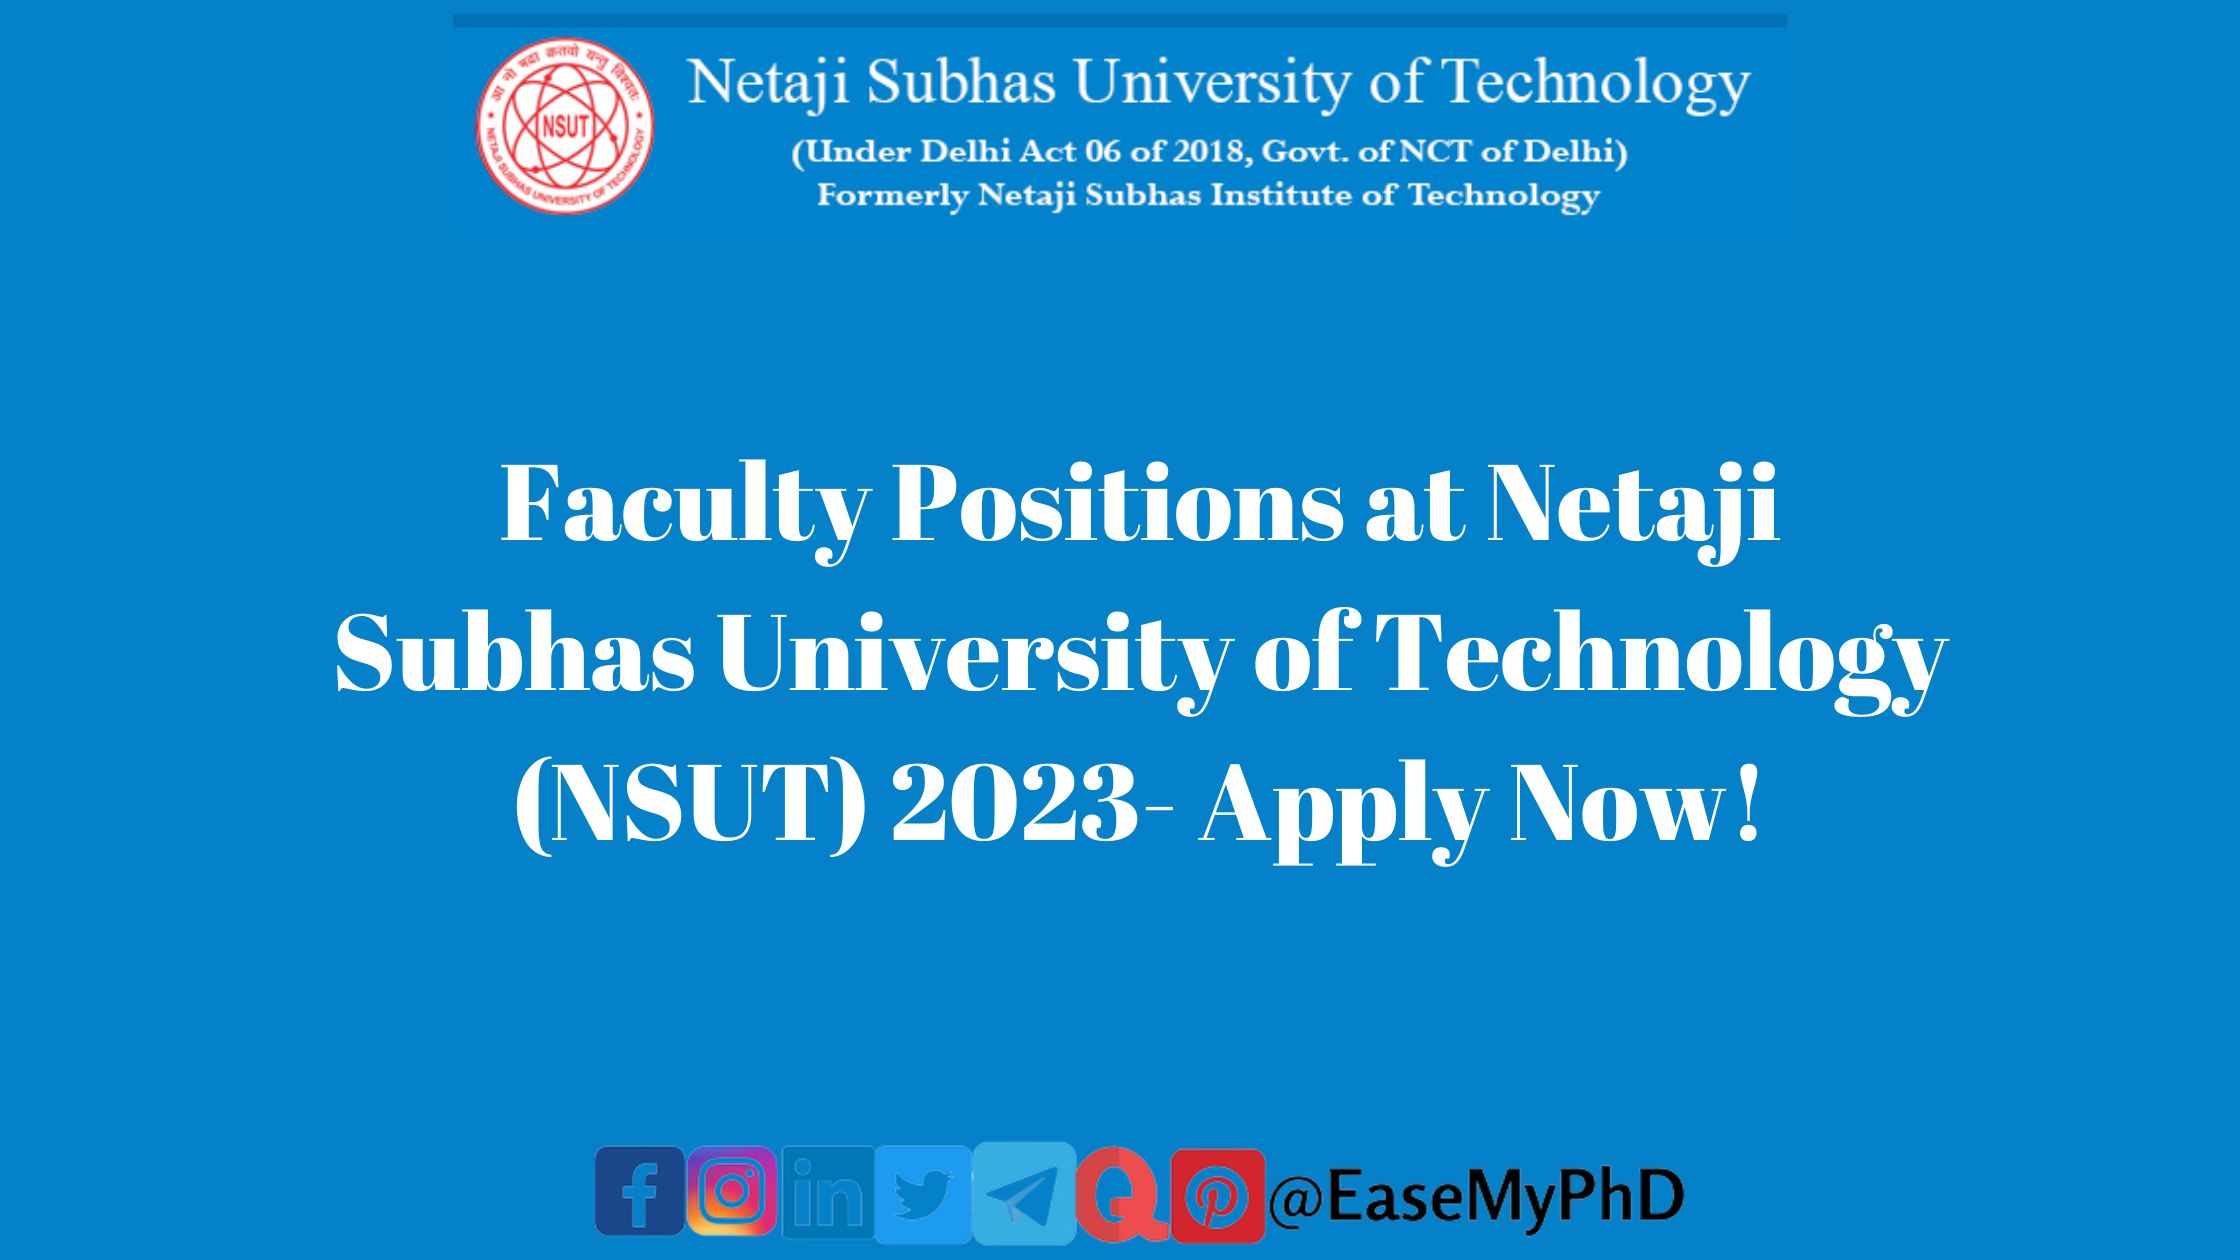 Faculty Positions at Netaji Subhas University of Technology (NSUT) - Apply Now!